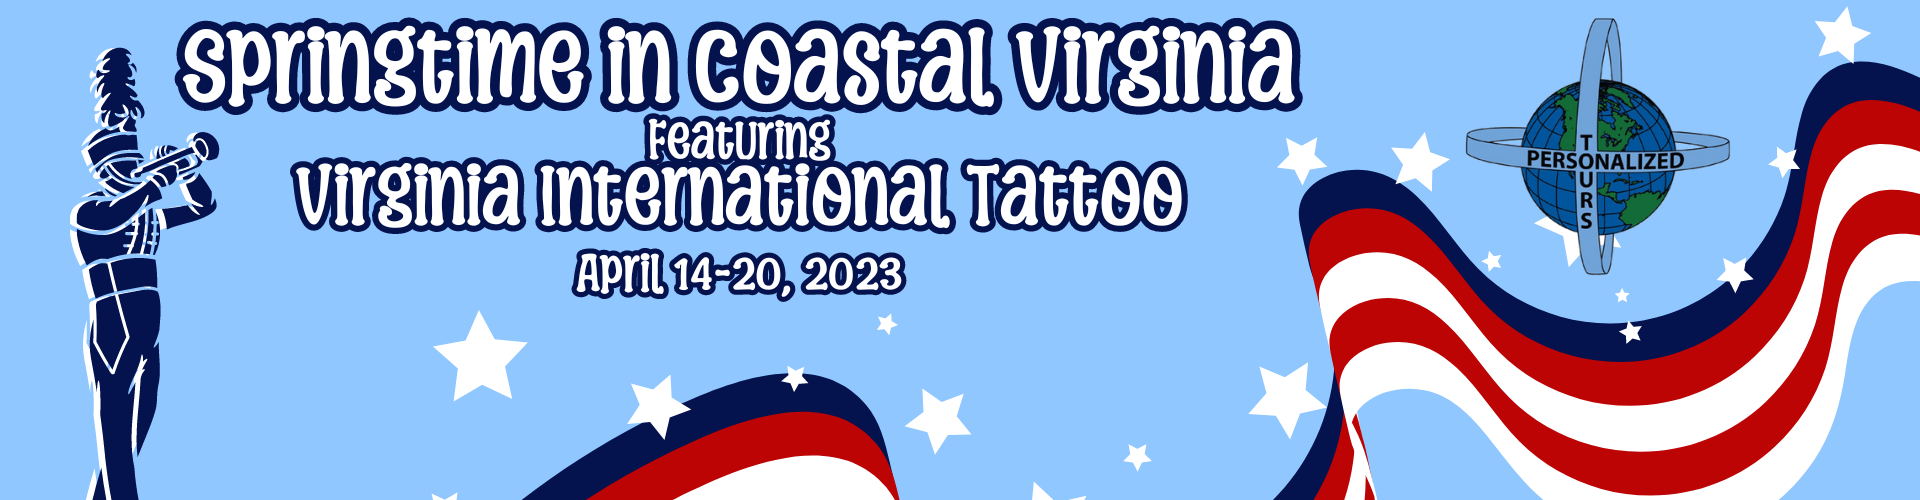 Coastal Virginia International Tattoo Festival